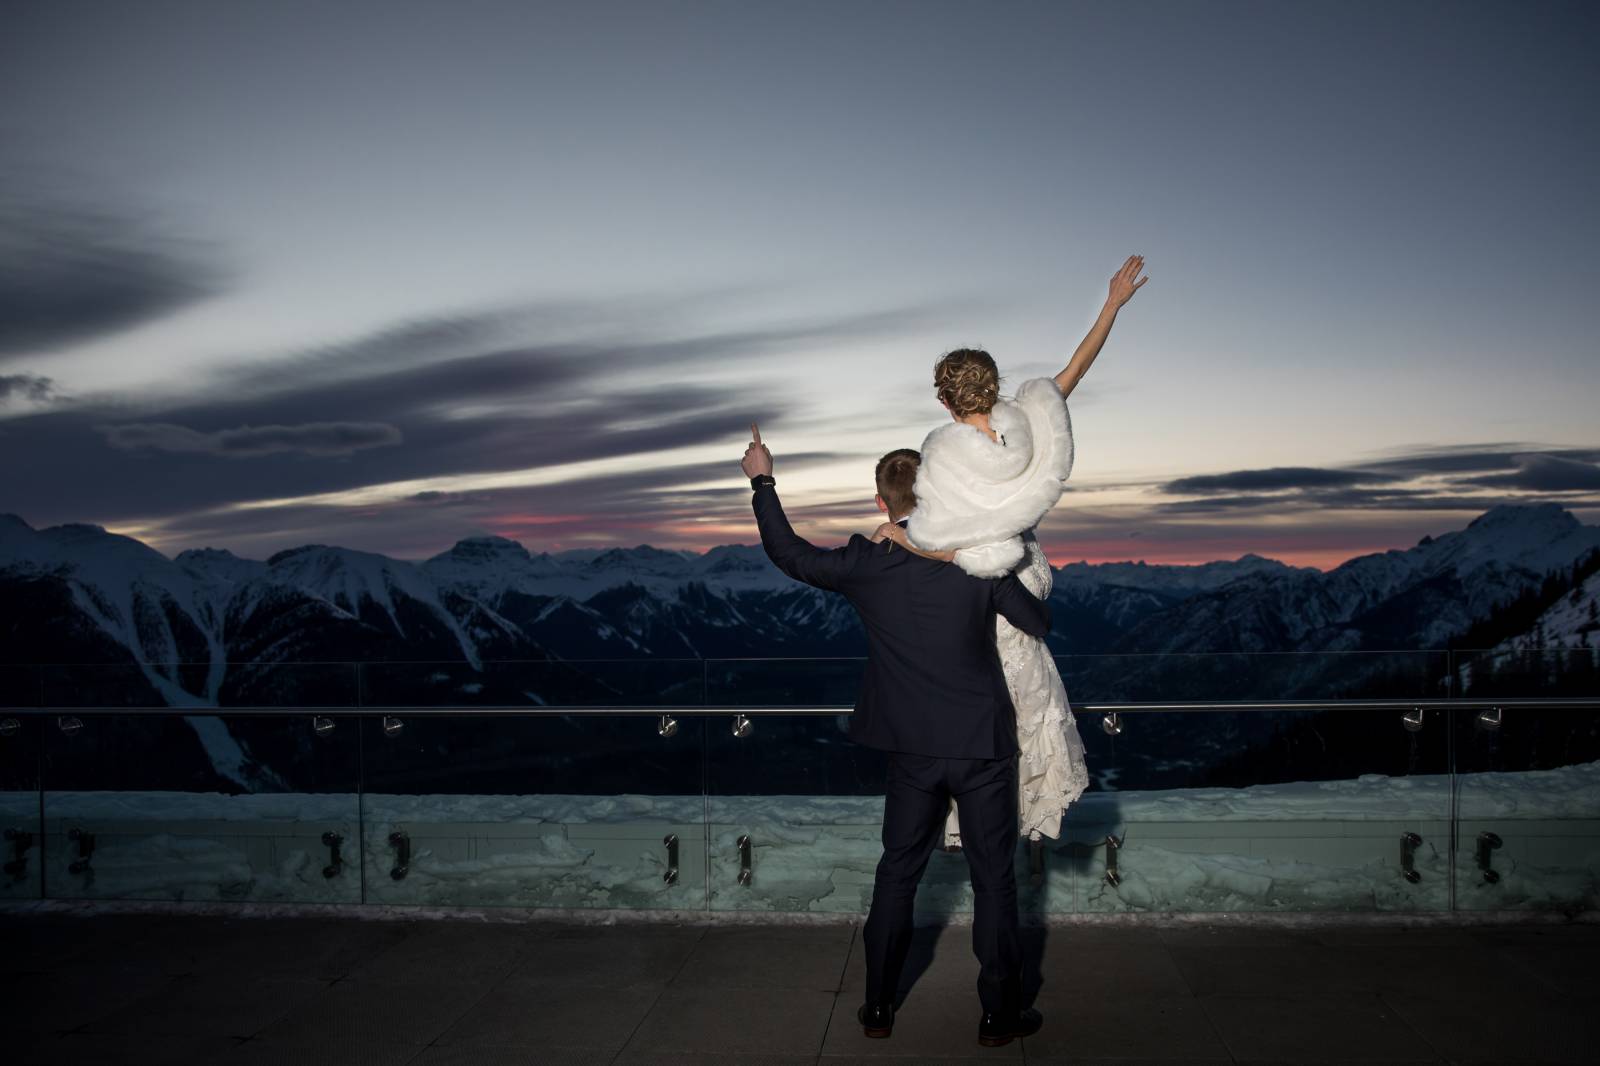 Banff Gondola Sky Bistro Wedding, Sky Bistro Wedding Reception, Bride and groom first dance, Banff w